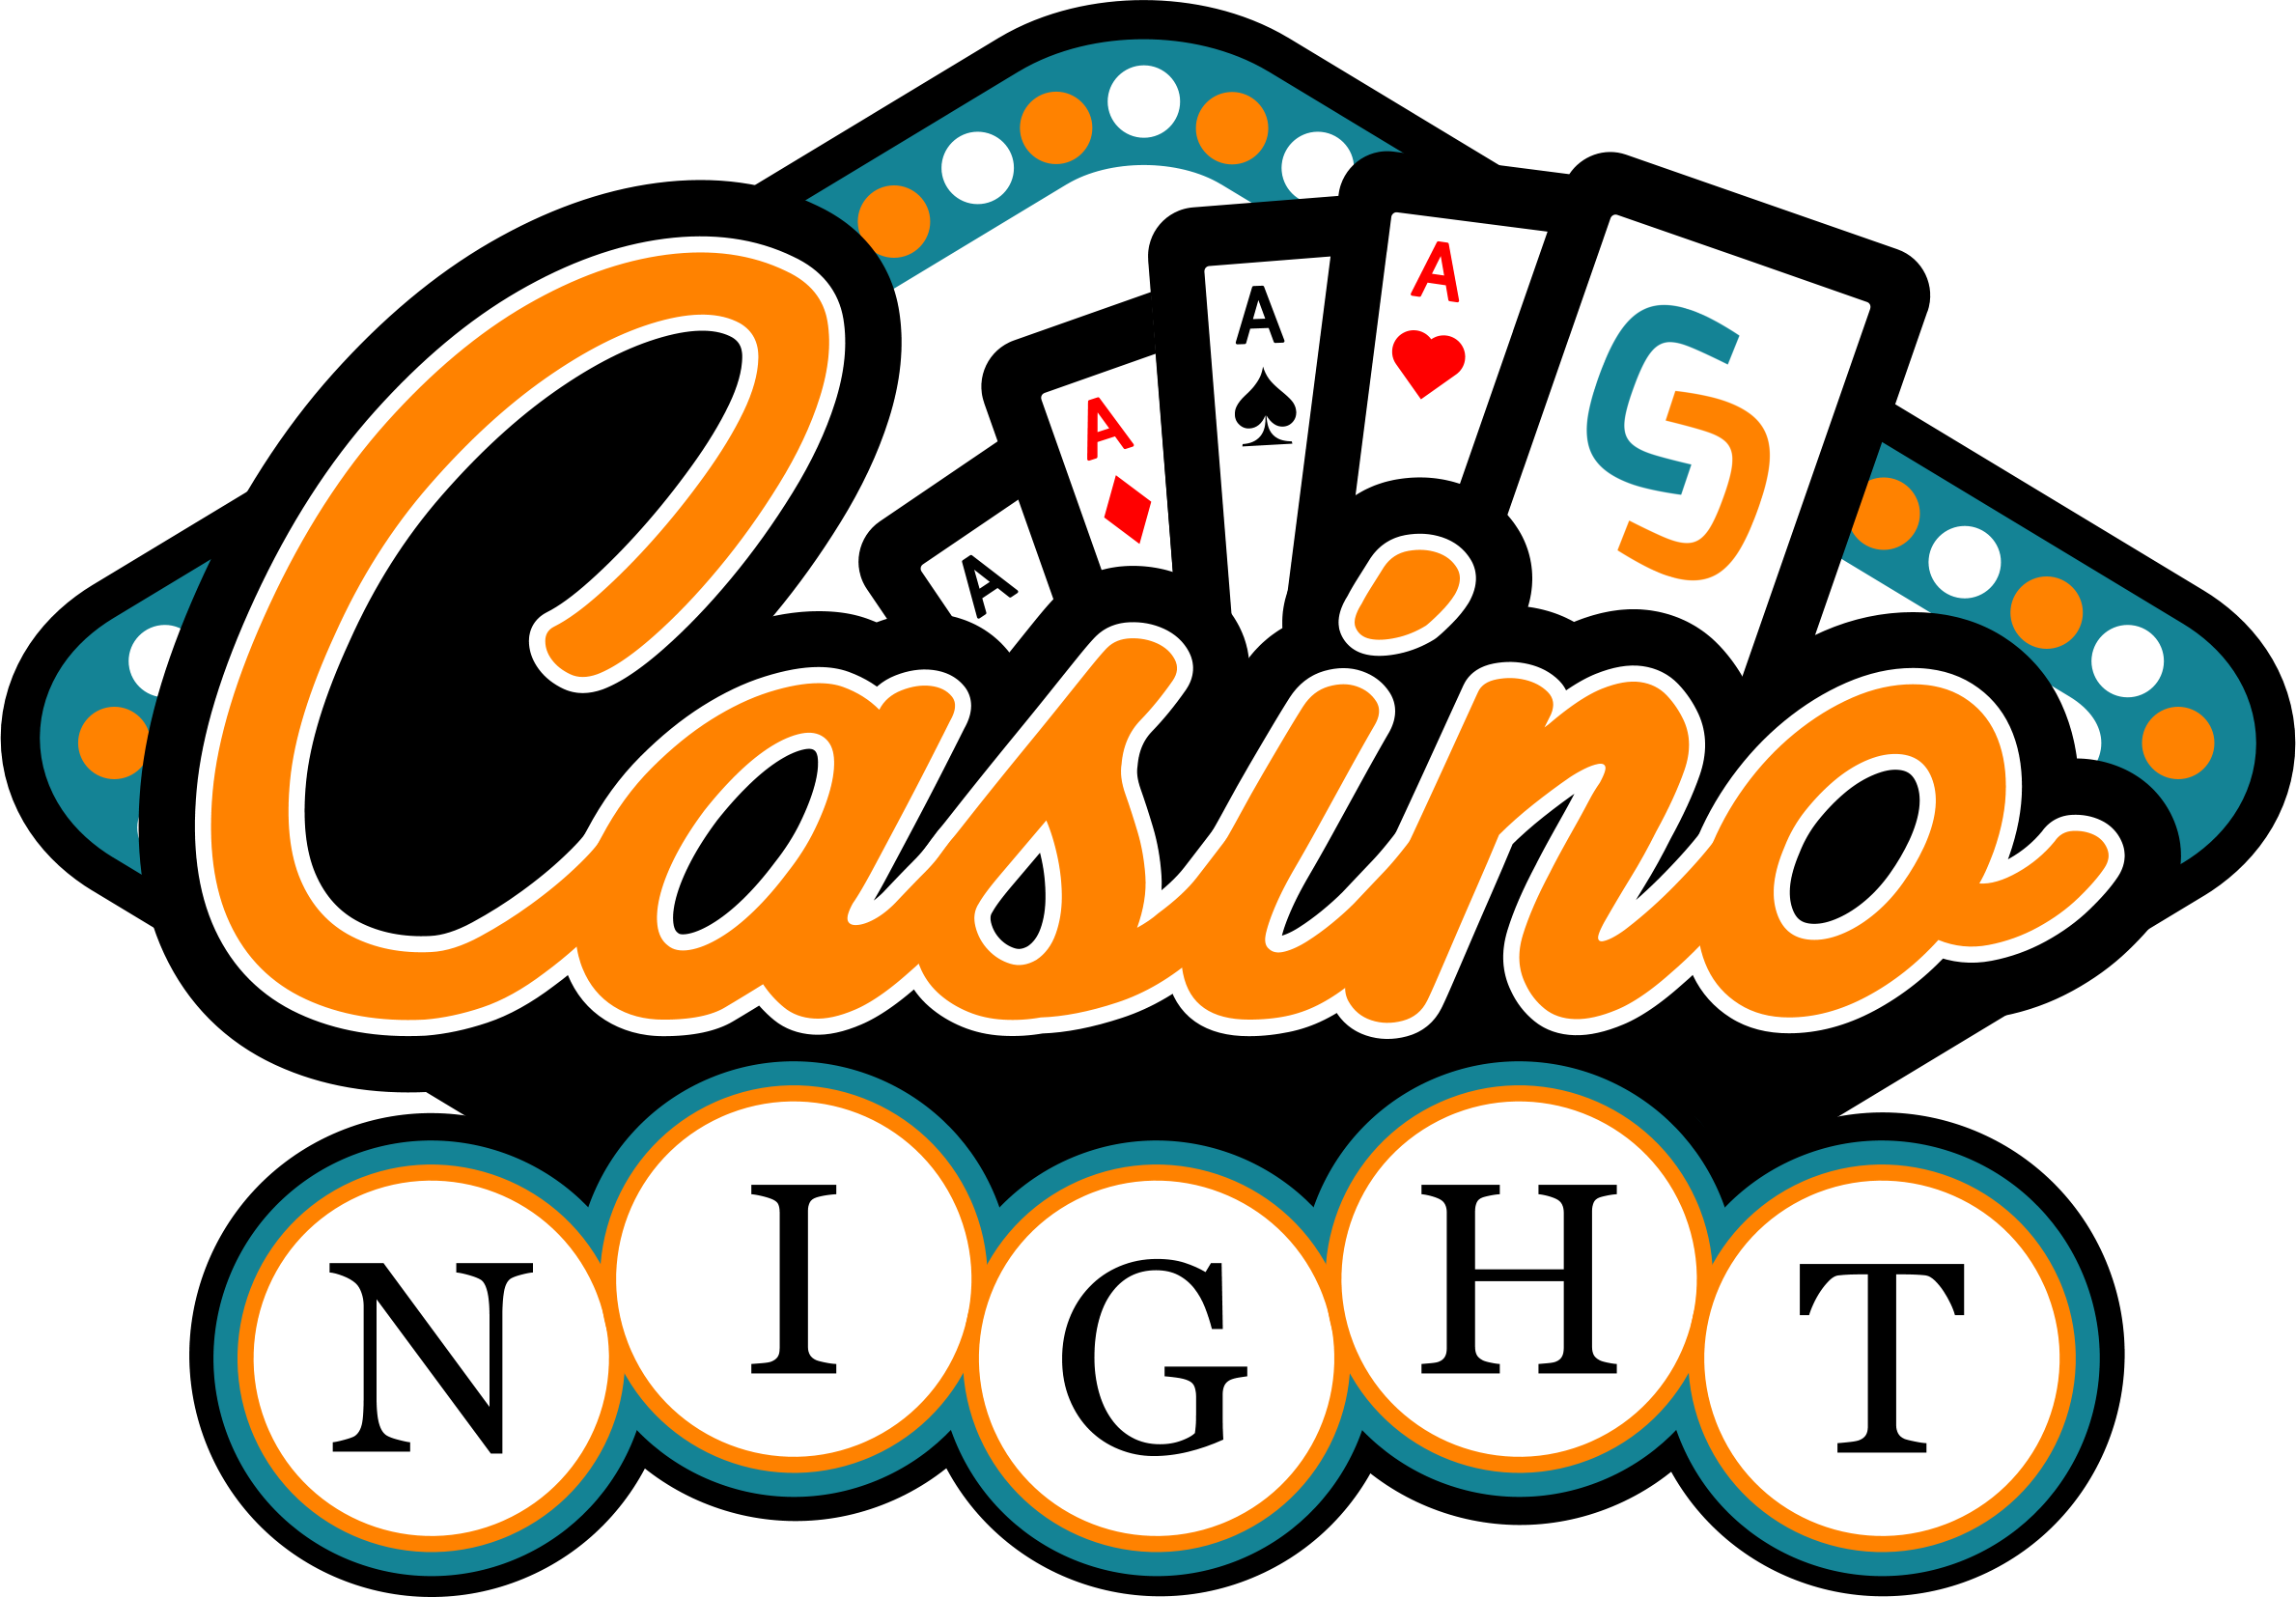 casino night clip art free - photo #25